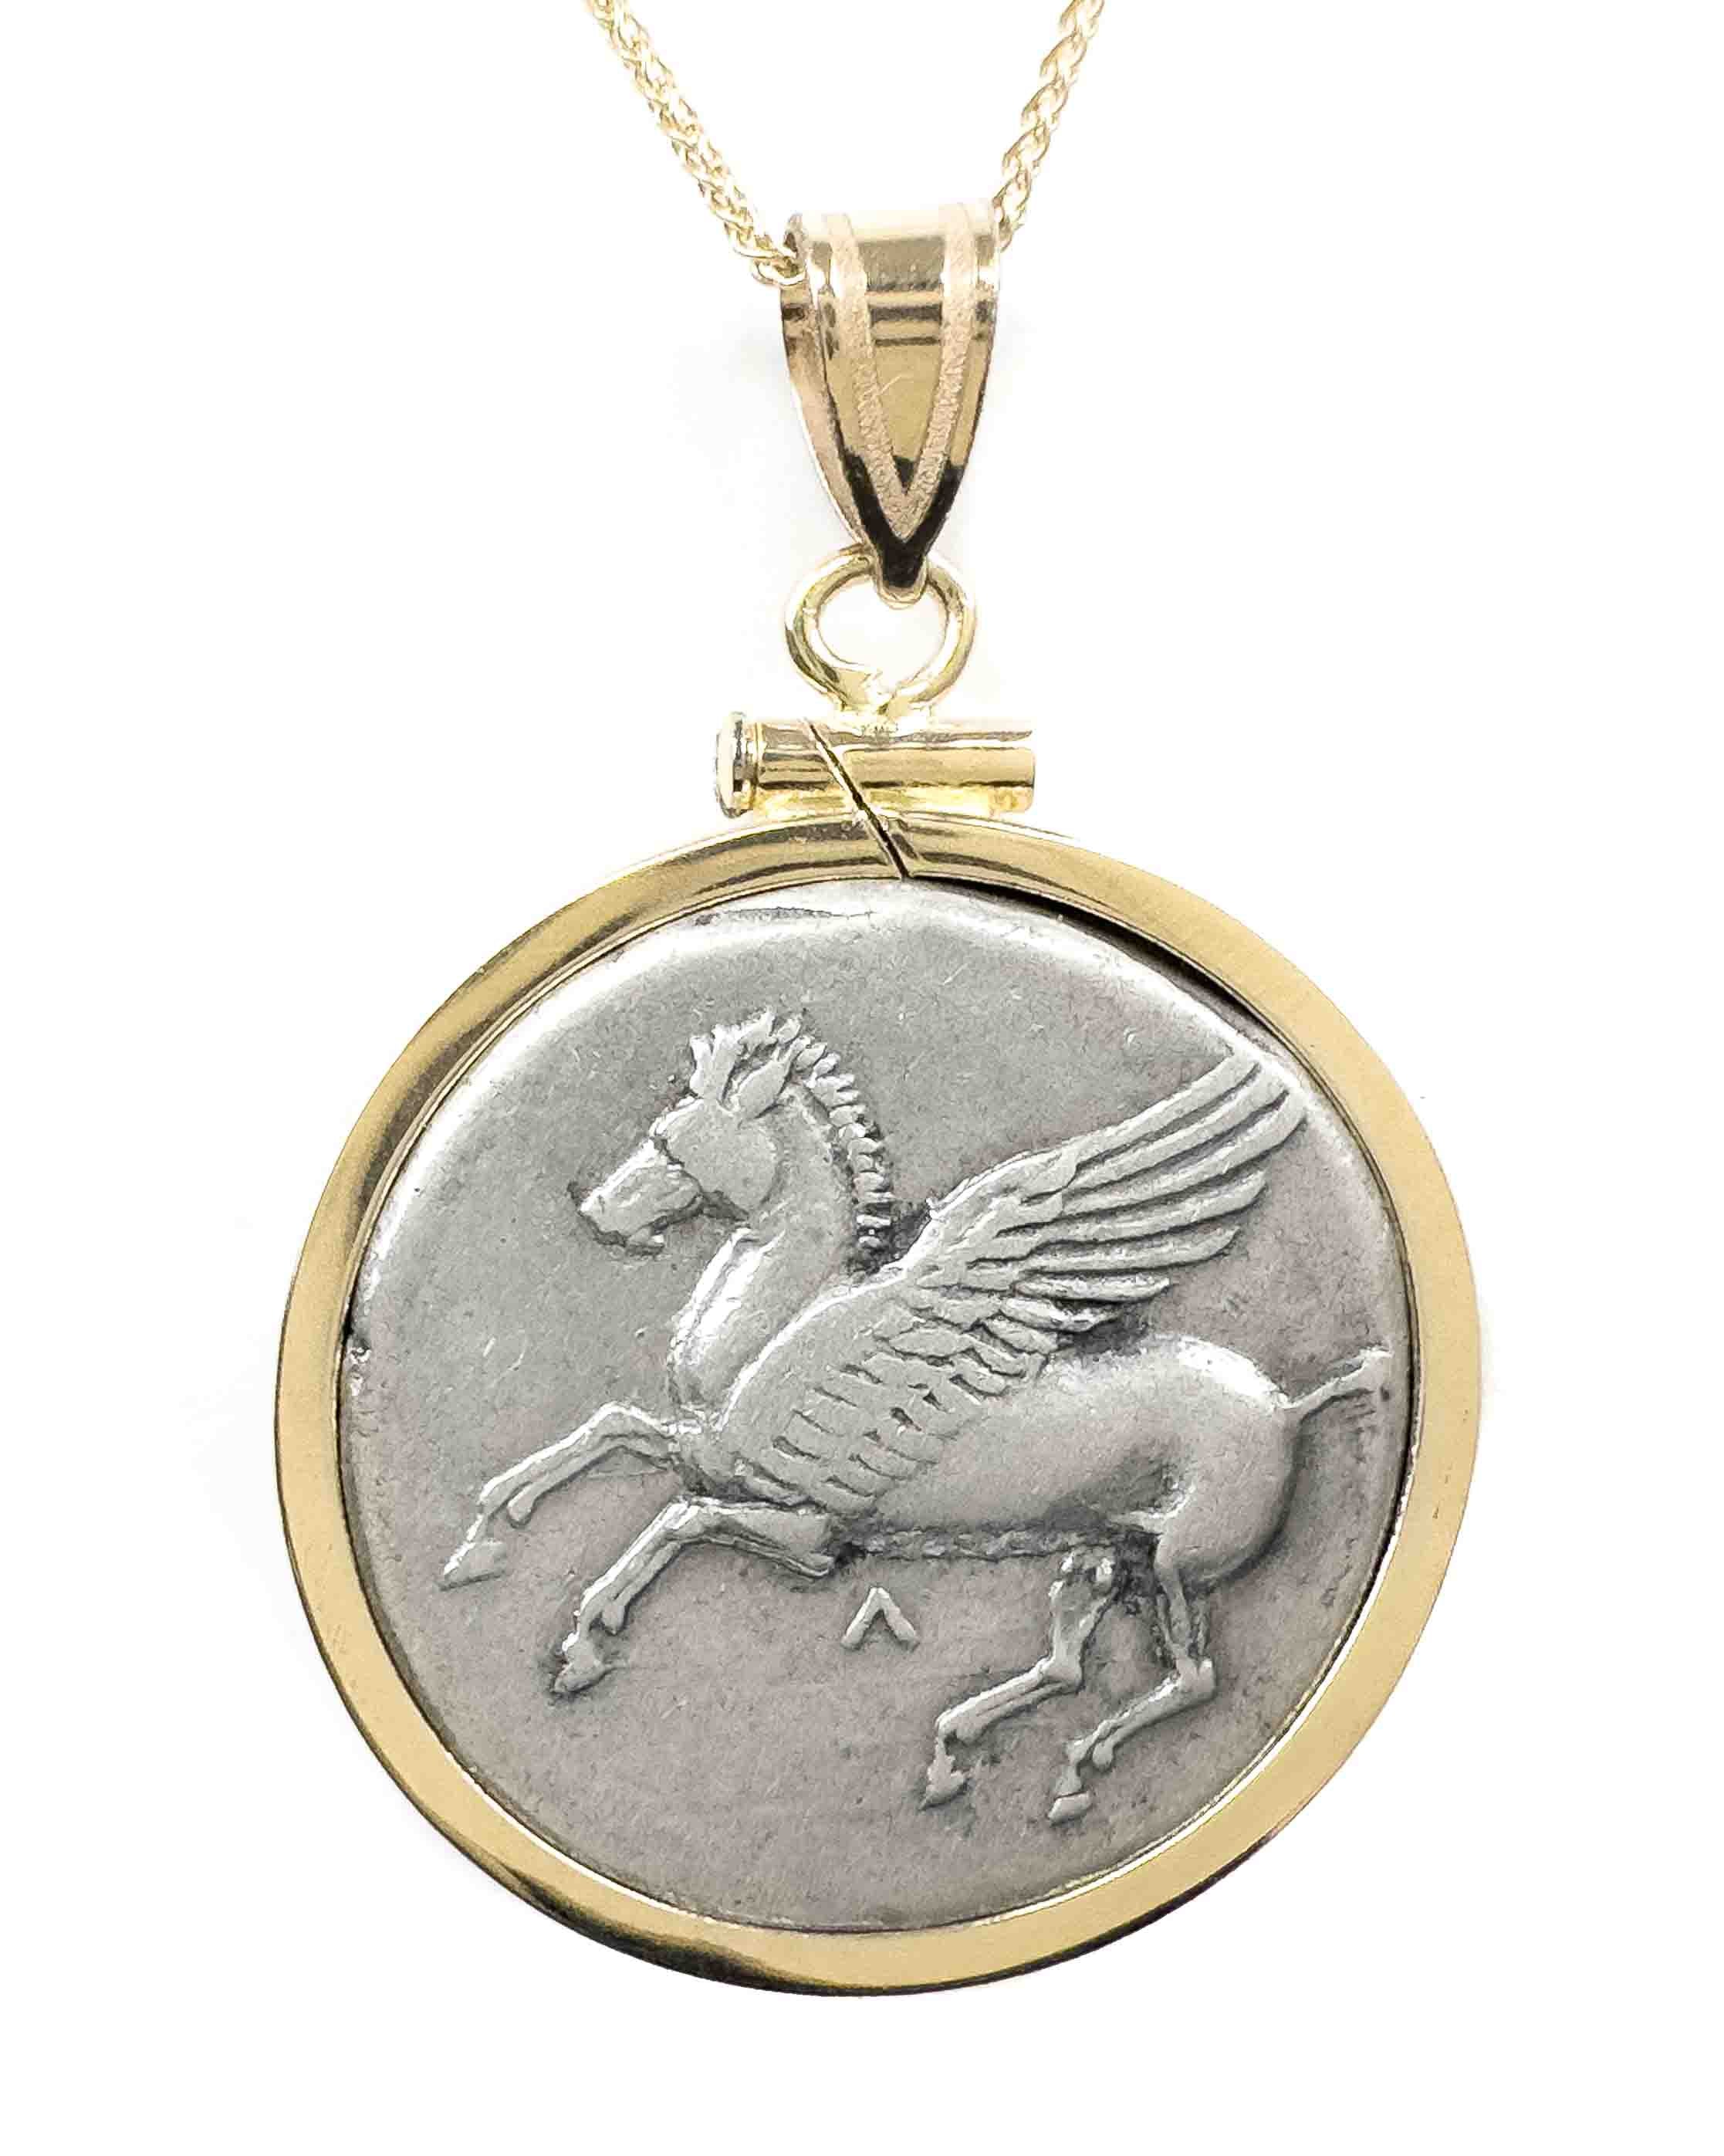 14k Gold Genuine Ancient Greek Coin Necklace (Pegasus/Athena; 320-380 B.C.)